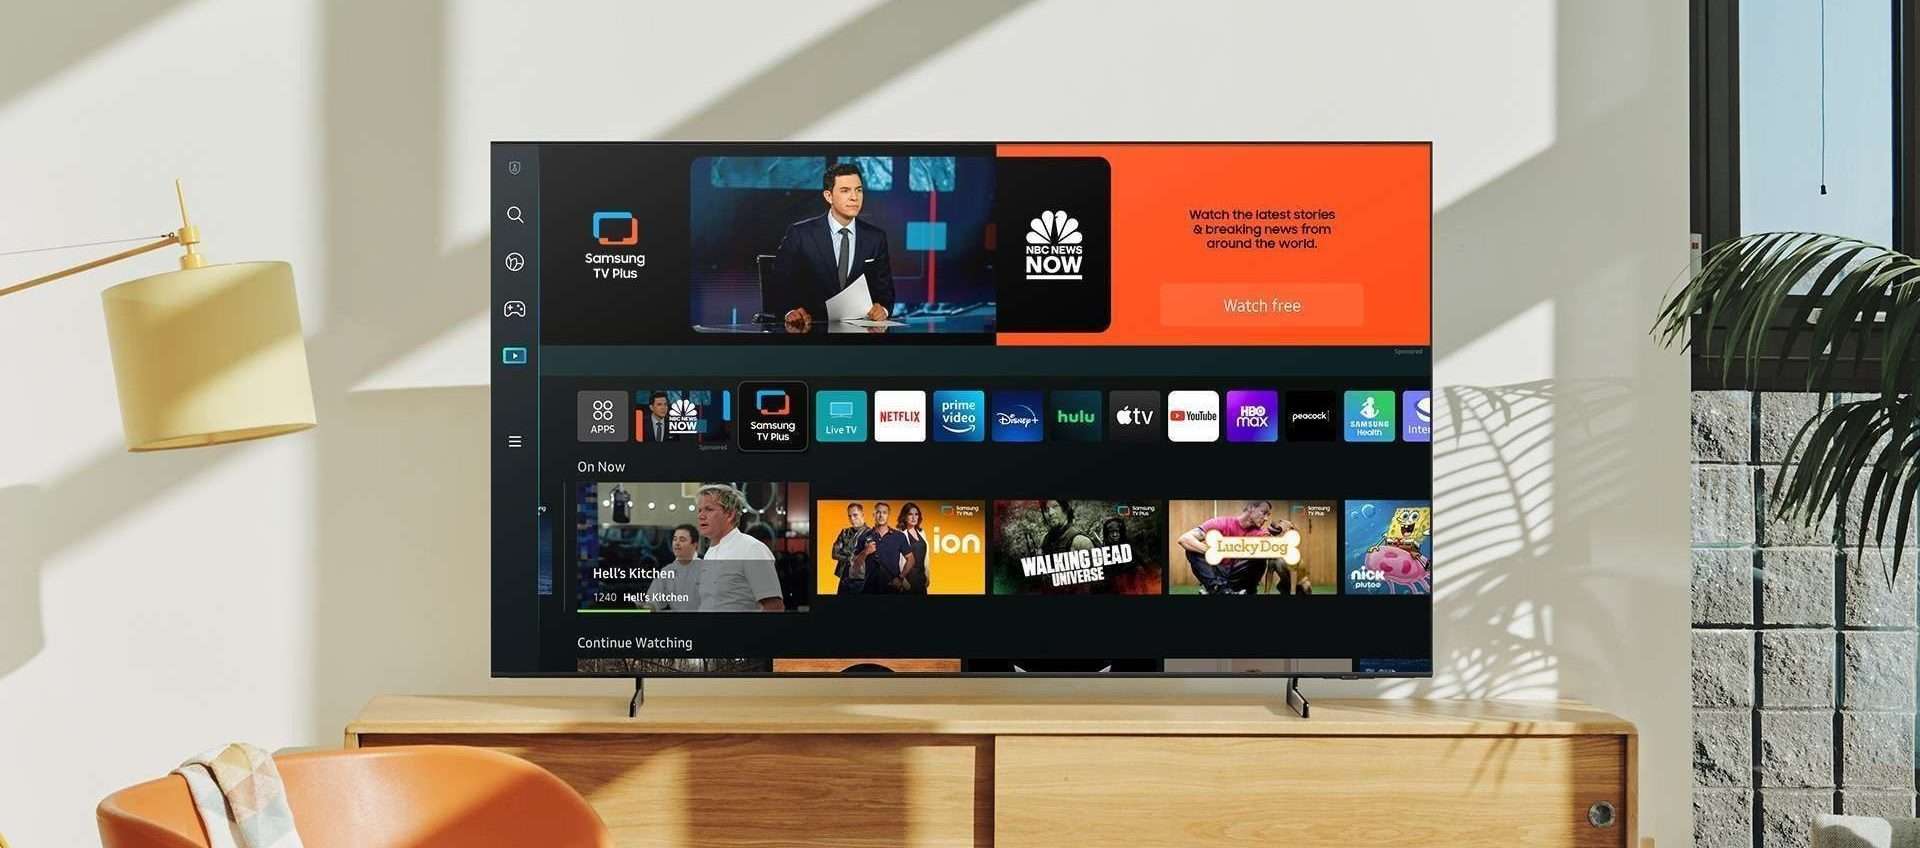 Smart TV QLED Samsung da 65 pollici: SUPER OFFERTA su Amazon (anche in 12 rate)